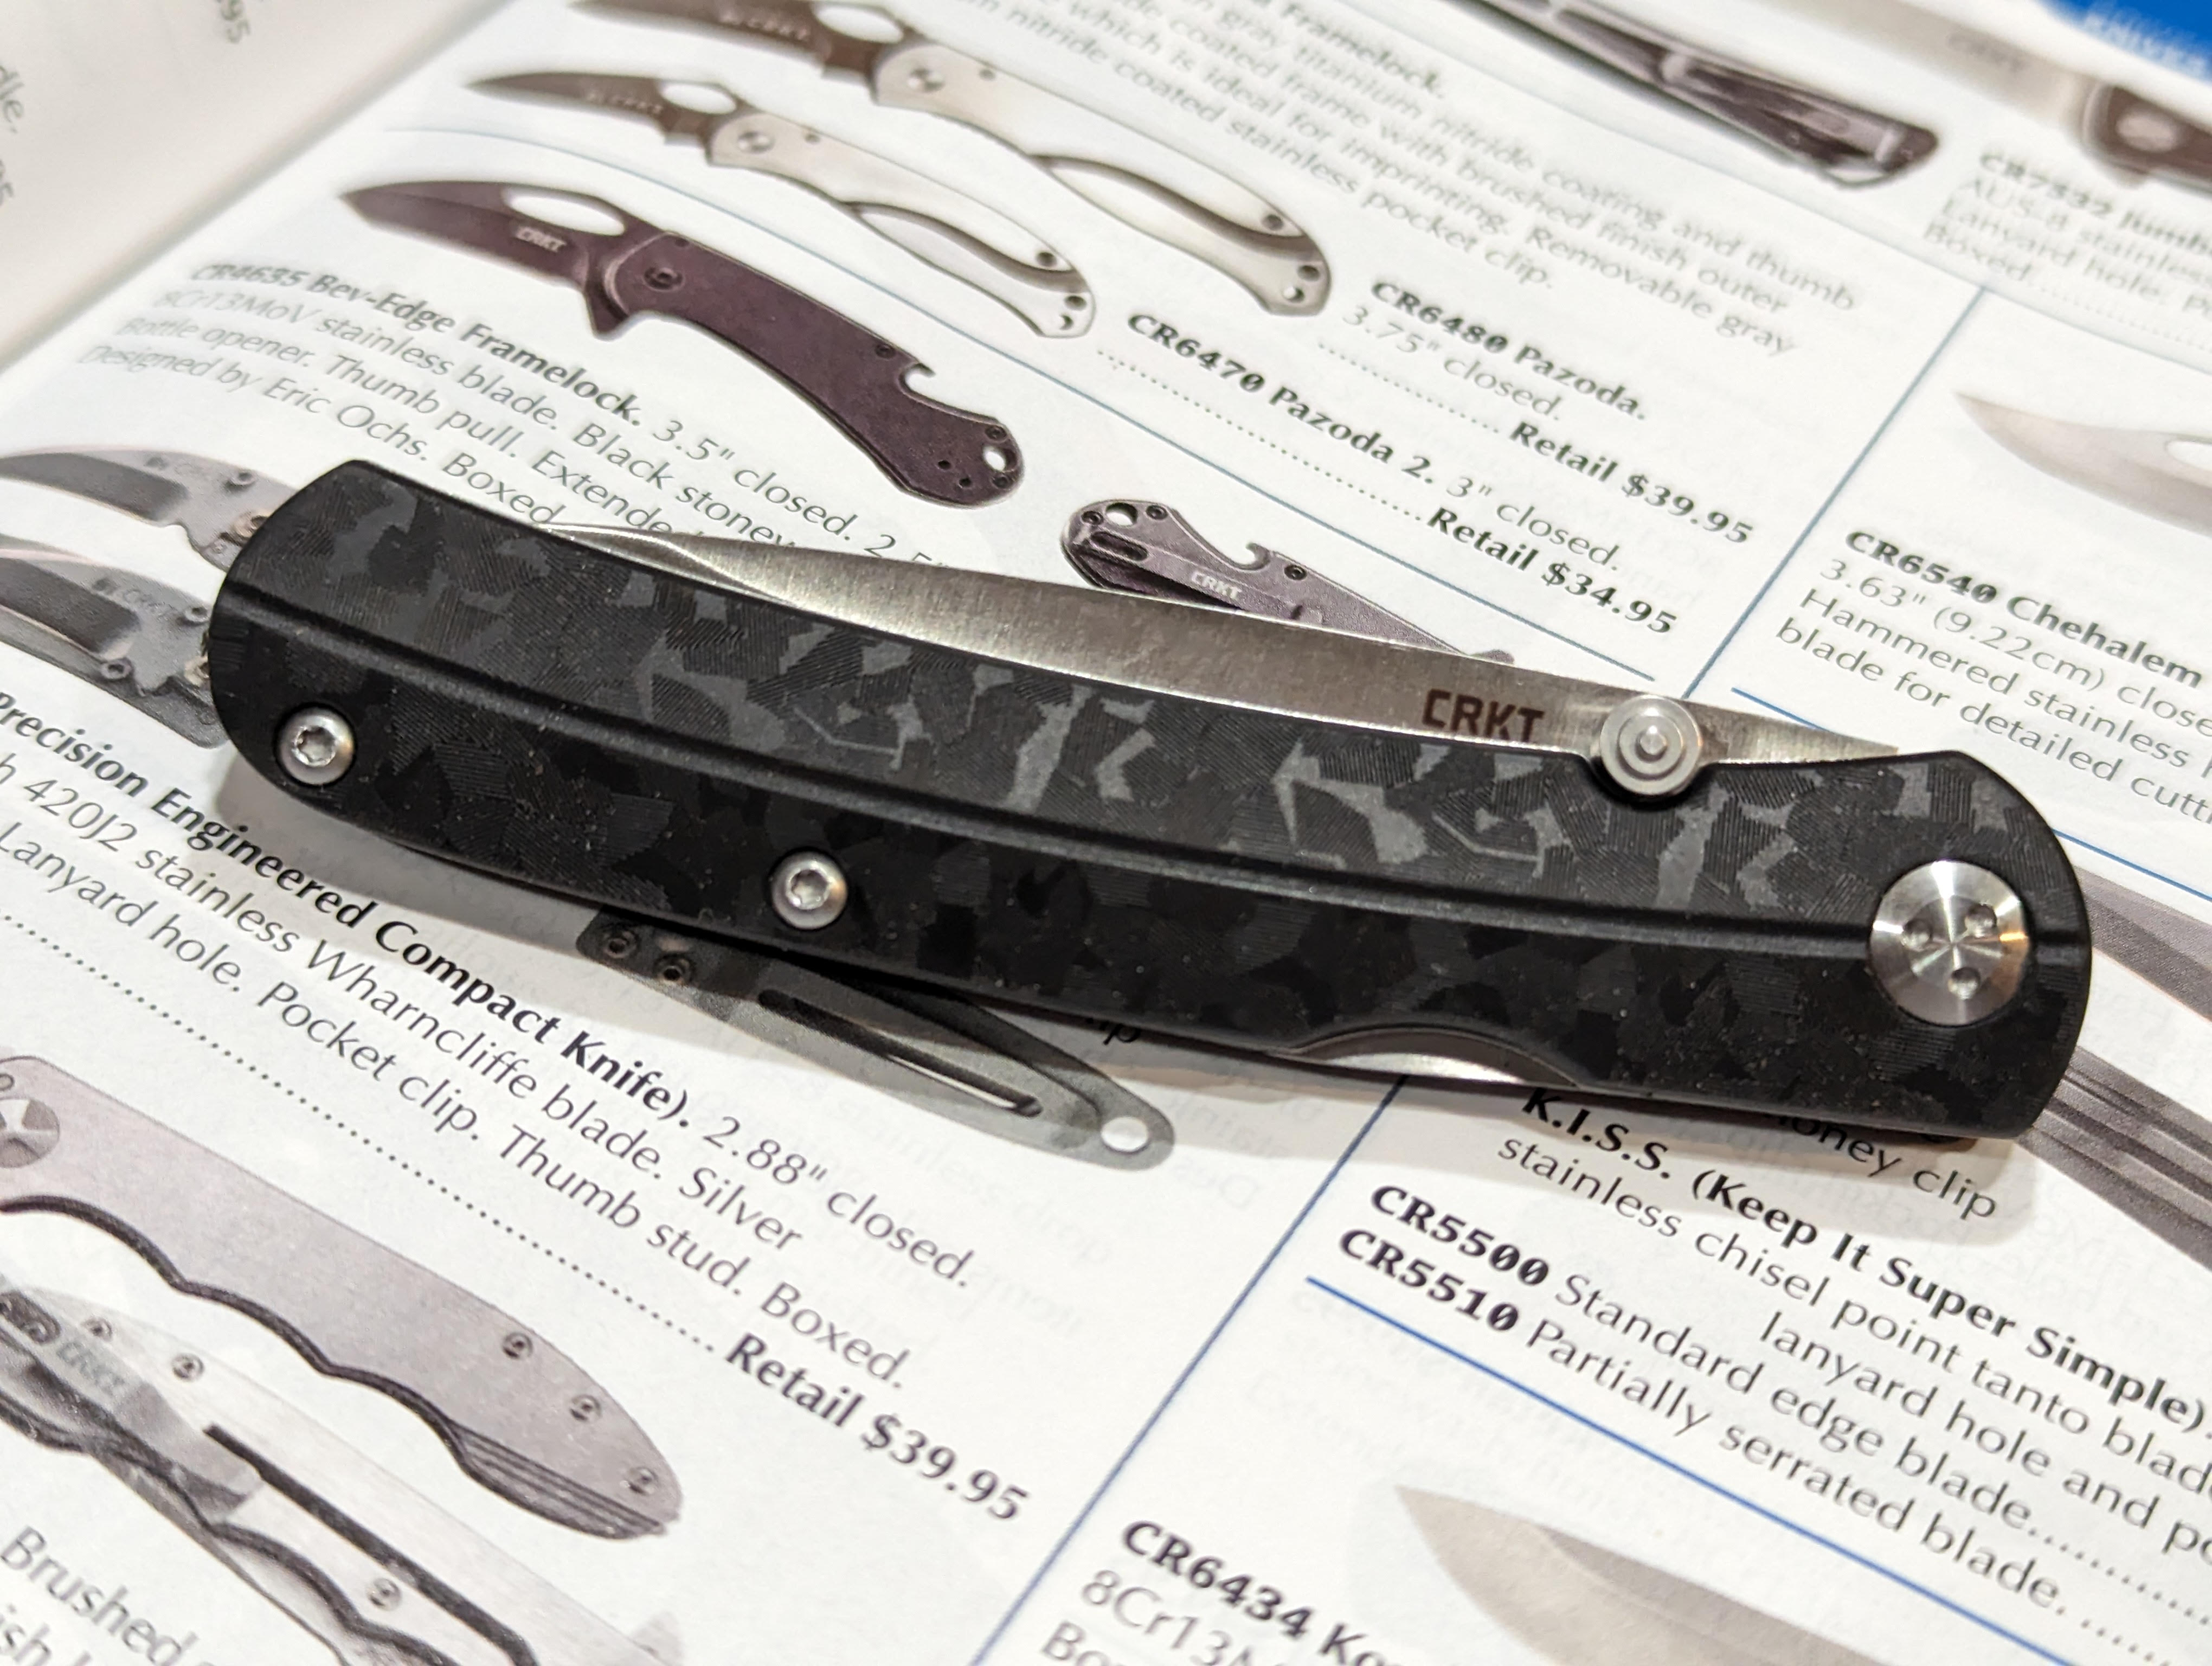  Cool Hand 3.75'' Carbon Fiber Folding Knife, w/ 2.75